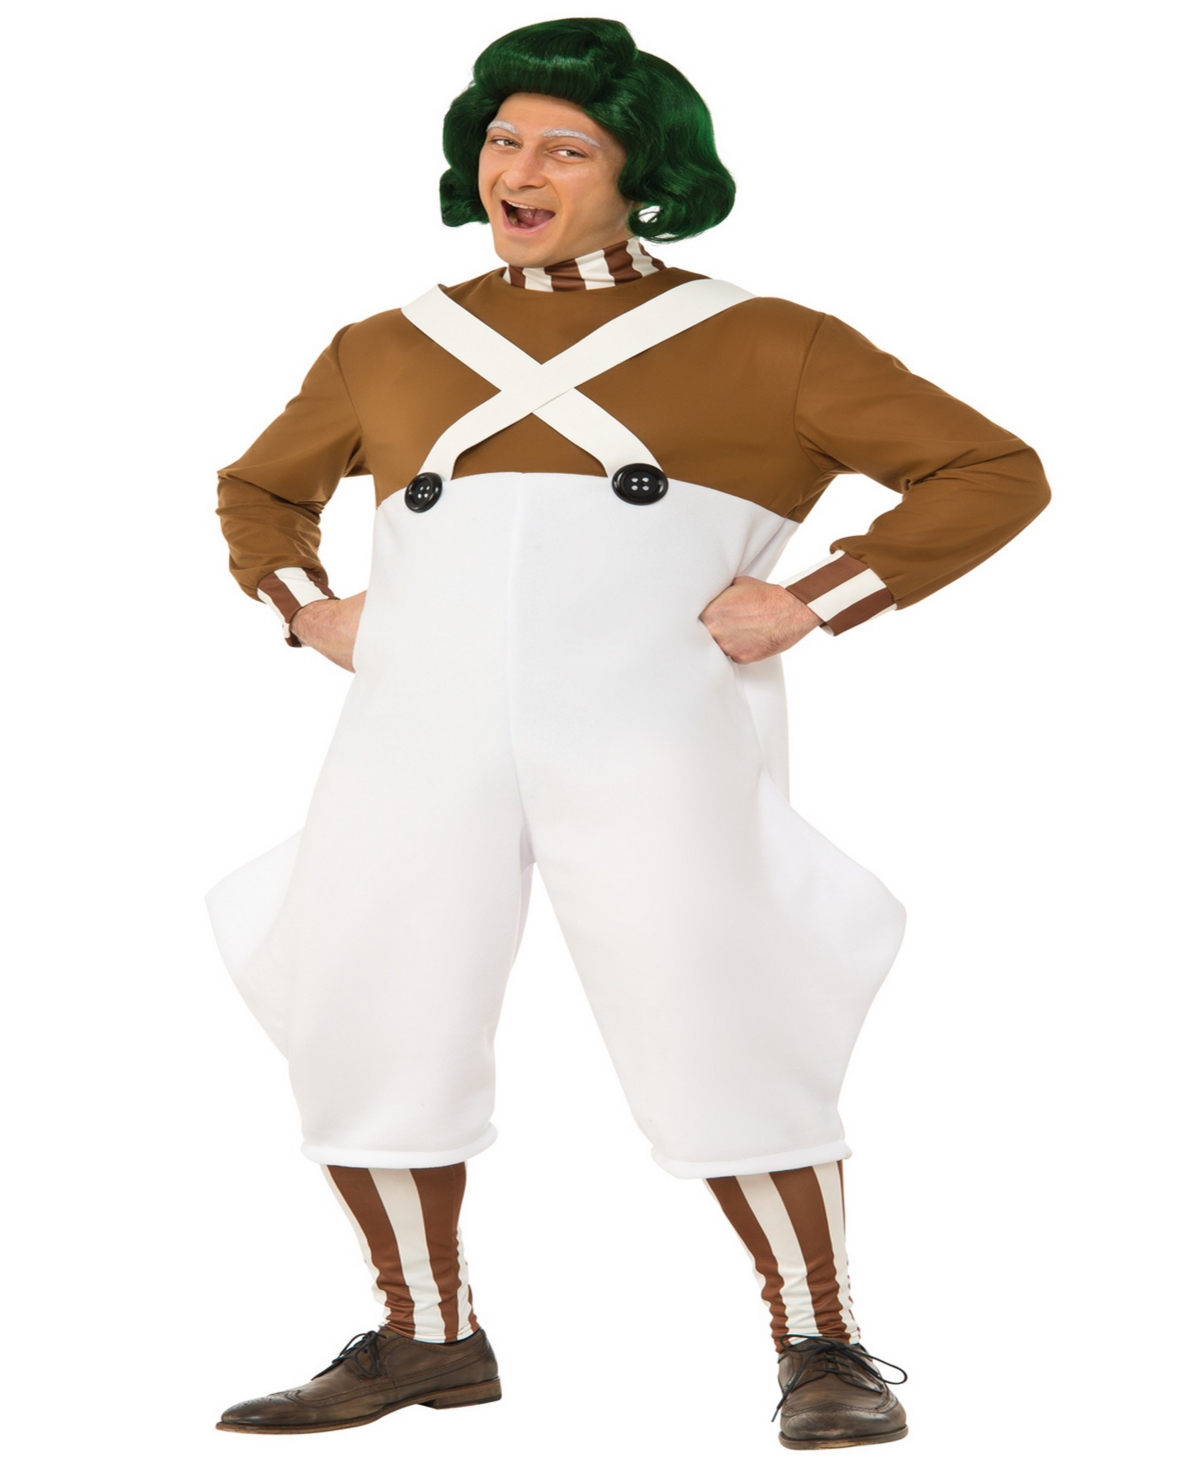 Buyseasons Buy Seasons Men's Willy Wonka and the Chocolate Factory: Oompa Loompa Deluxe Costume